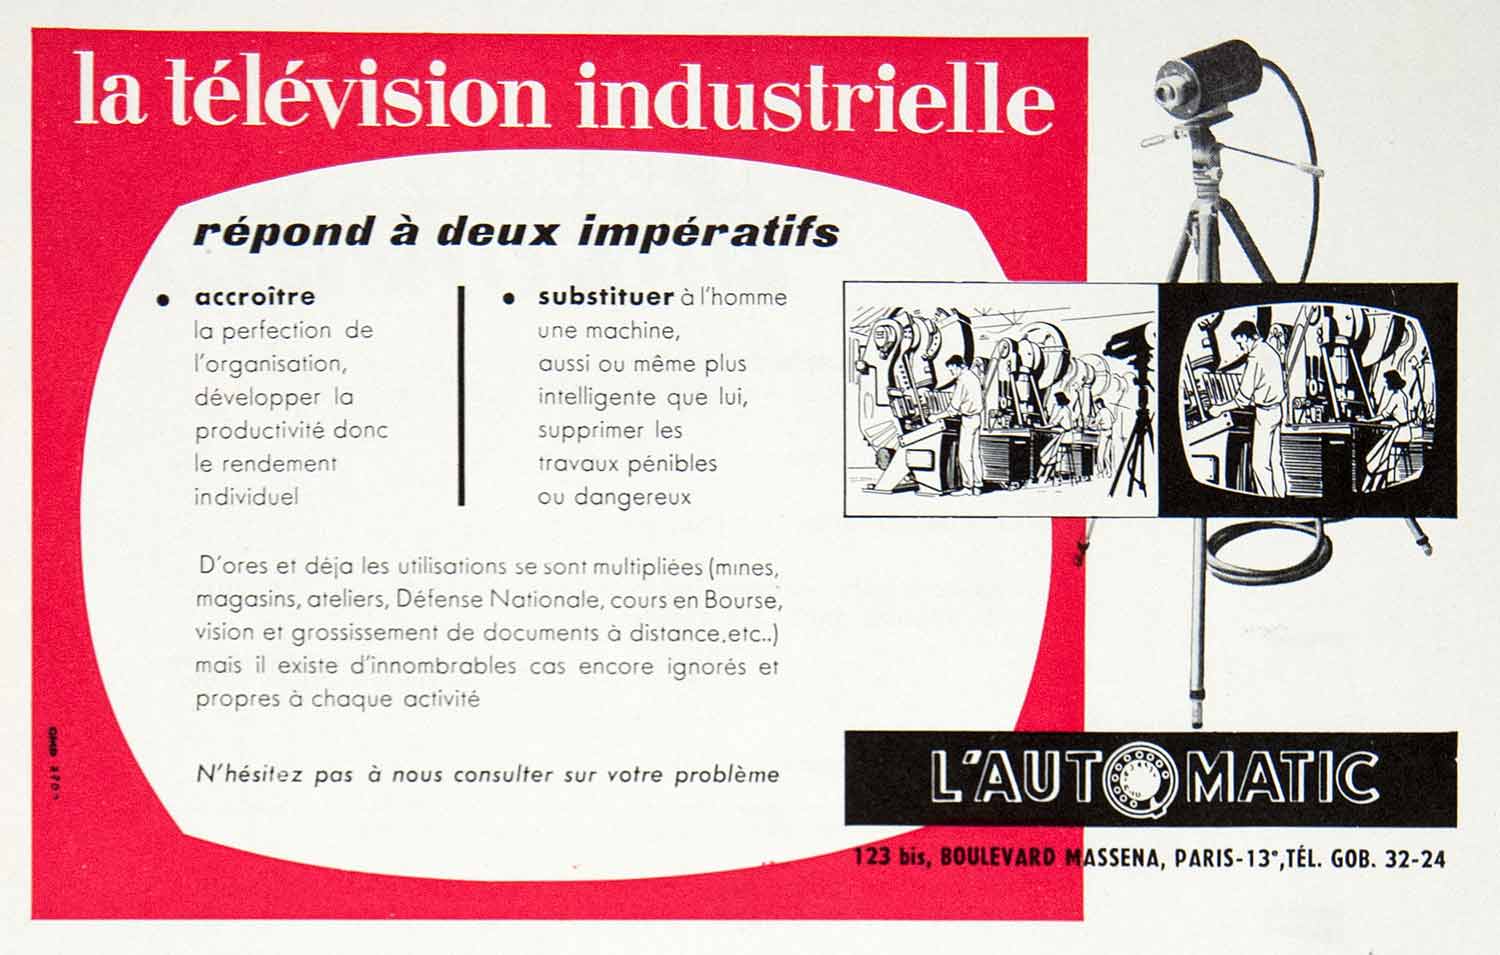 1957 Ad L'Automatic Industrial Television 123 Boulevard Massena Paris VEN7